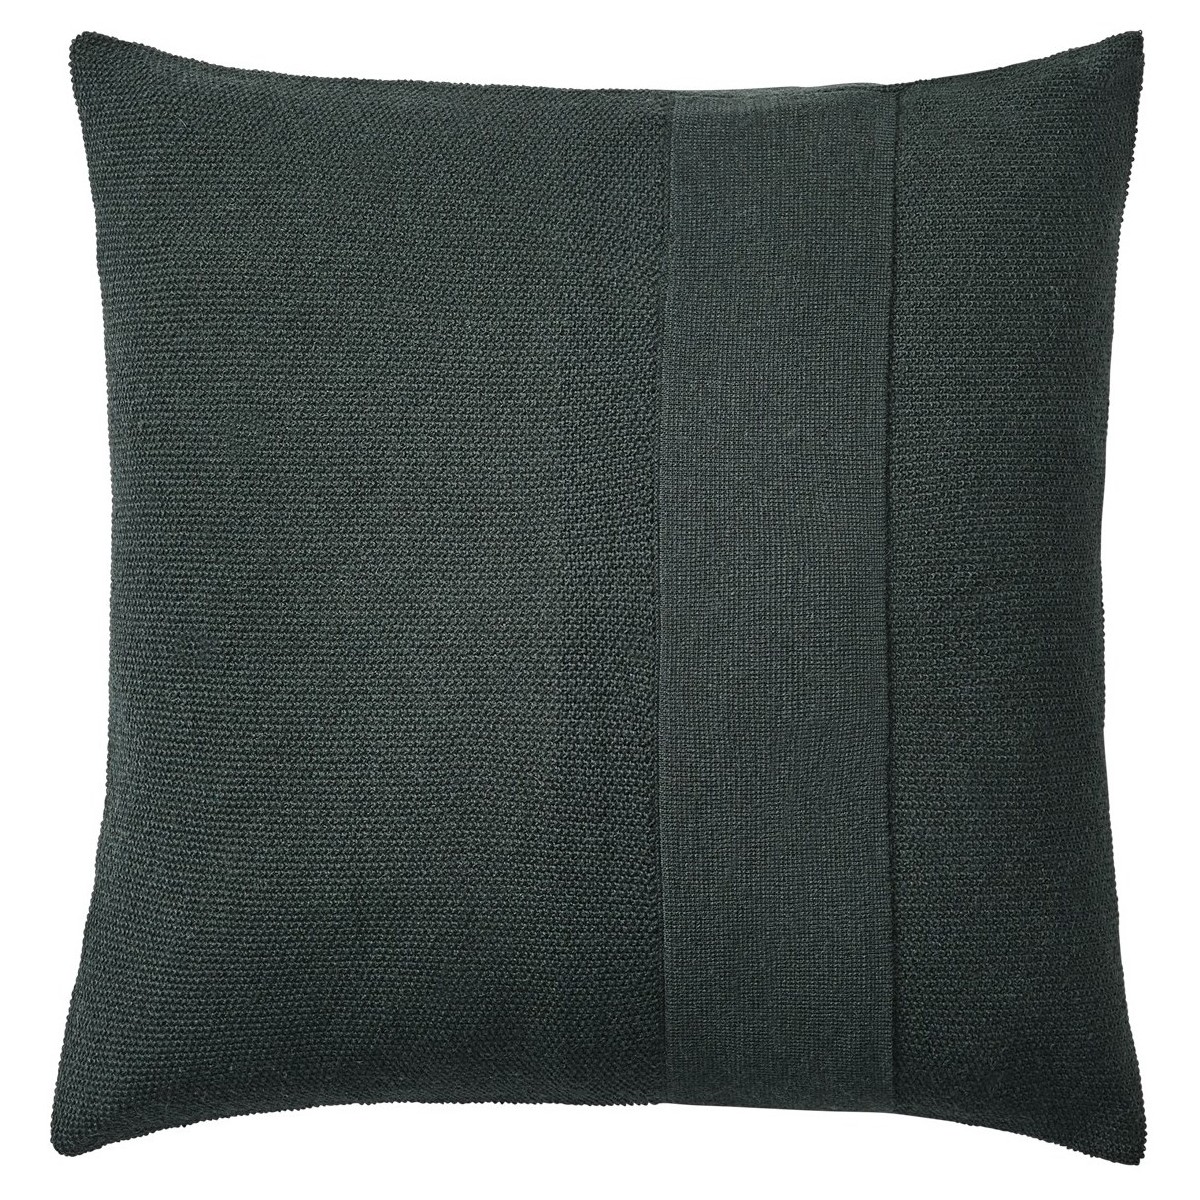 Layer cushion - 50 x 50 cm - dark green